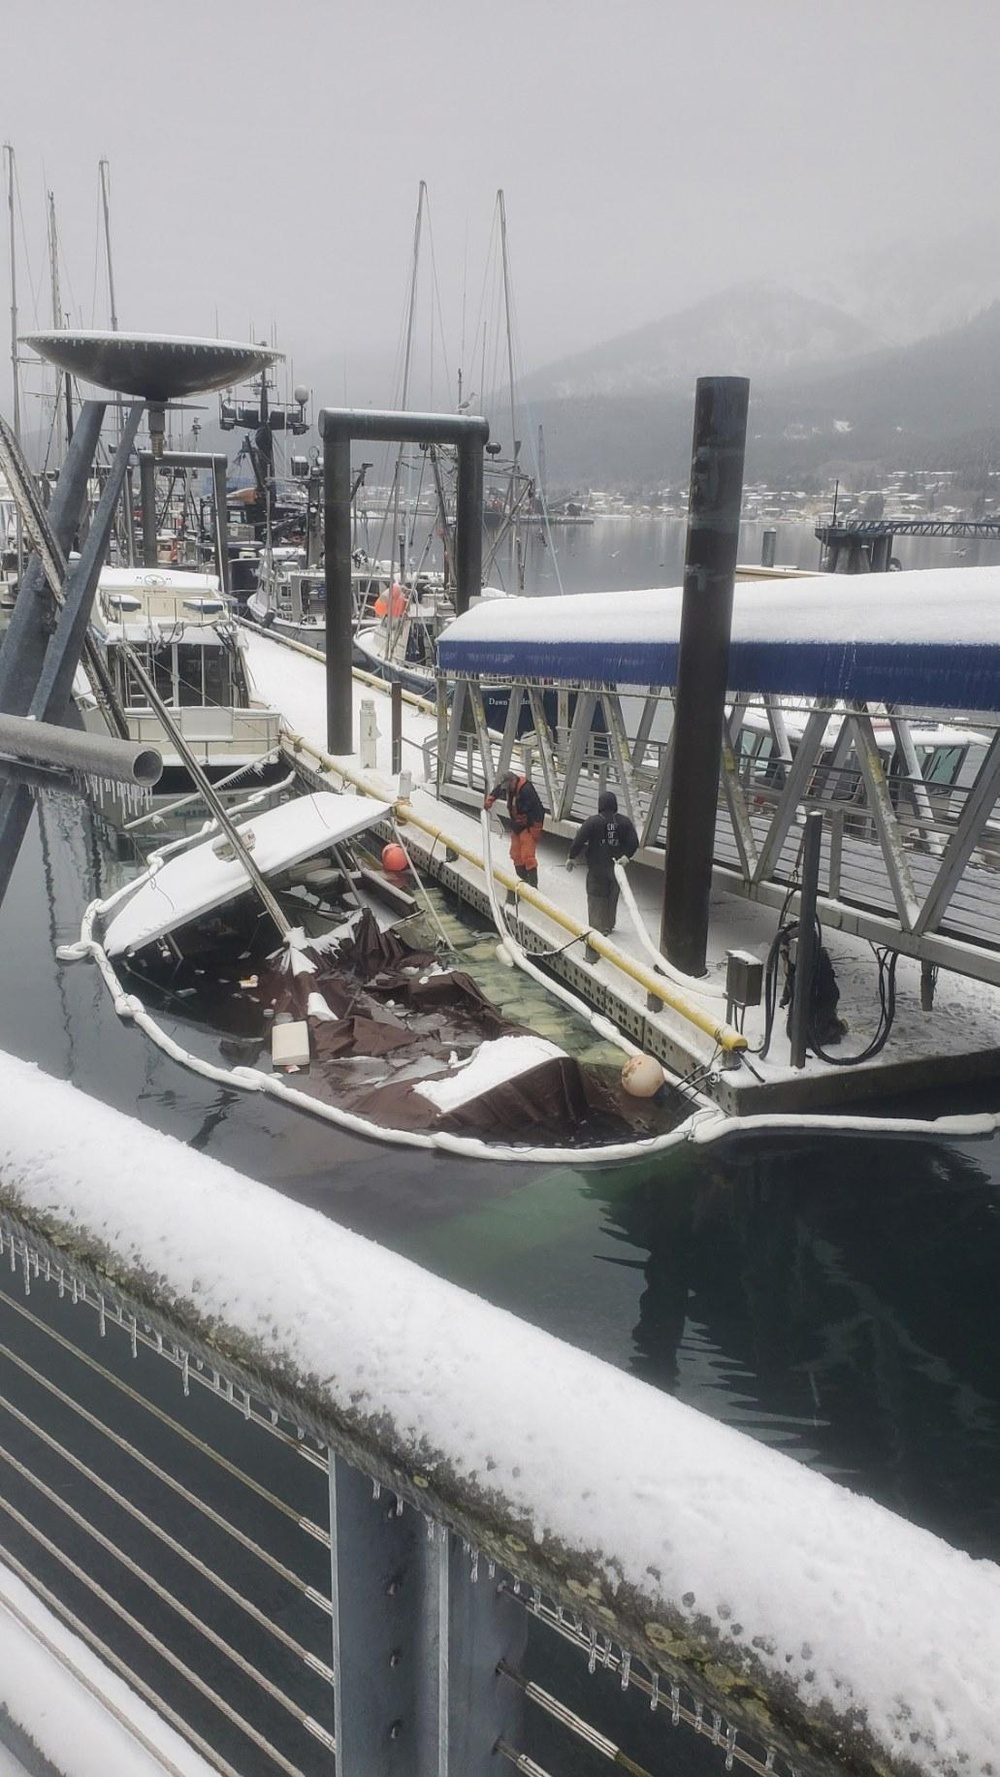 Coast Guard, local agencies respond to sunken docked vessel